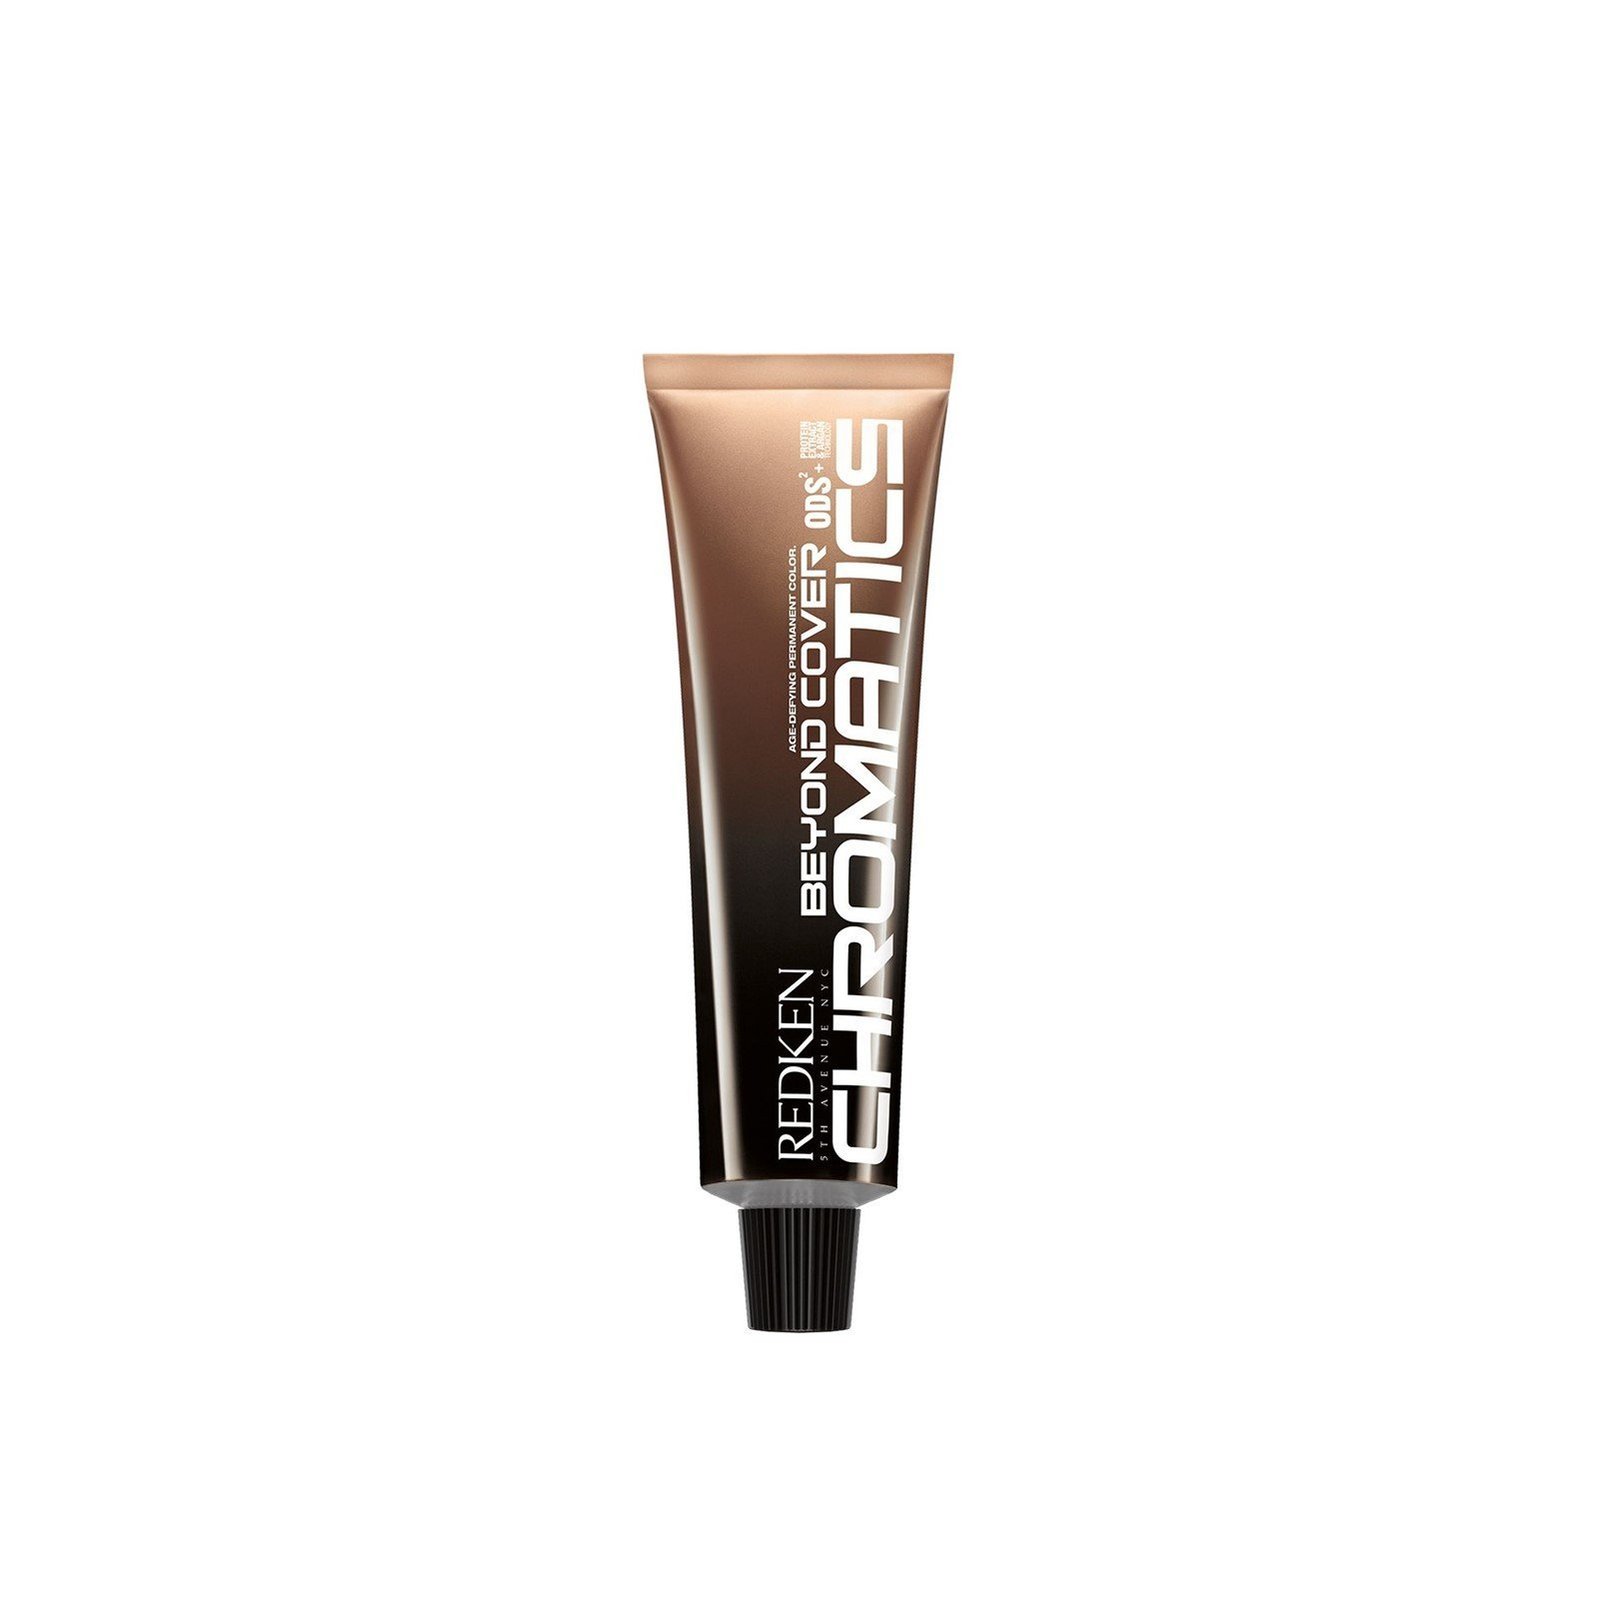 Redken Chromatics Beyond Cover Permanent Hair Dye 10GI Gold Iridescent 56.7g (2 oz)